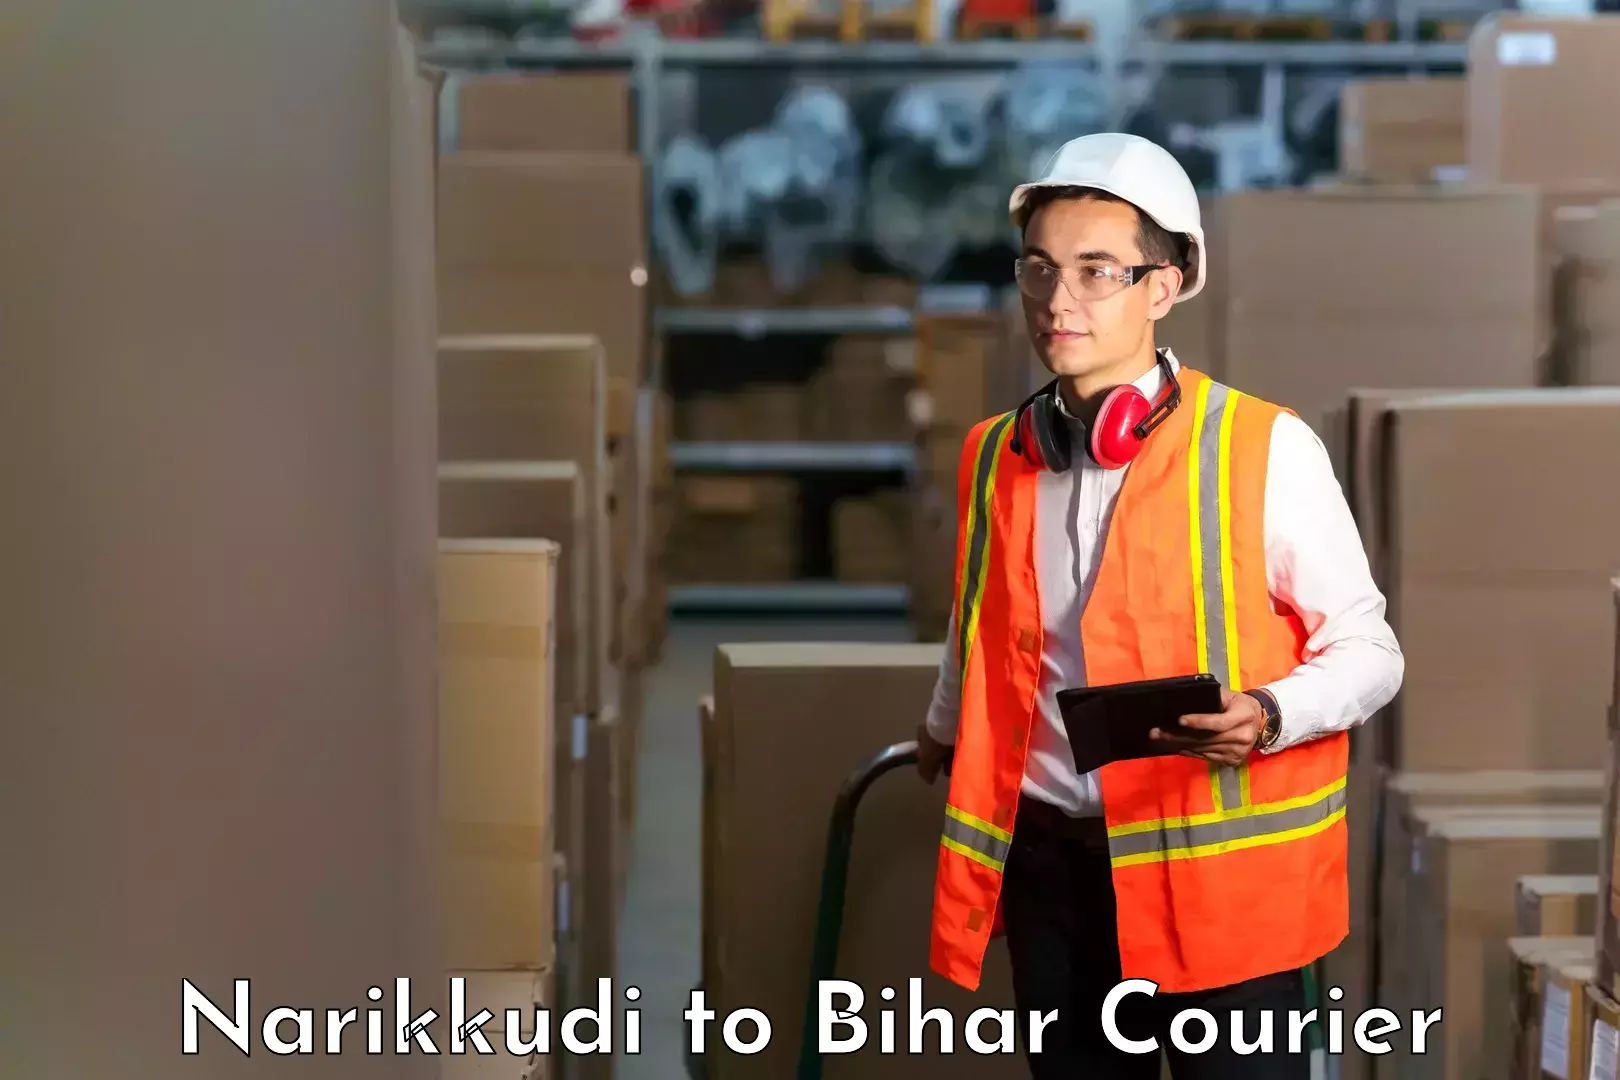 Global courier networks Narikkudi to Bharwara